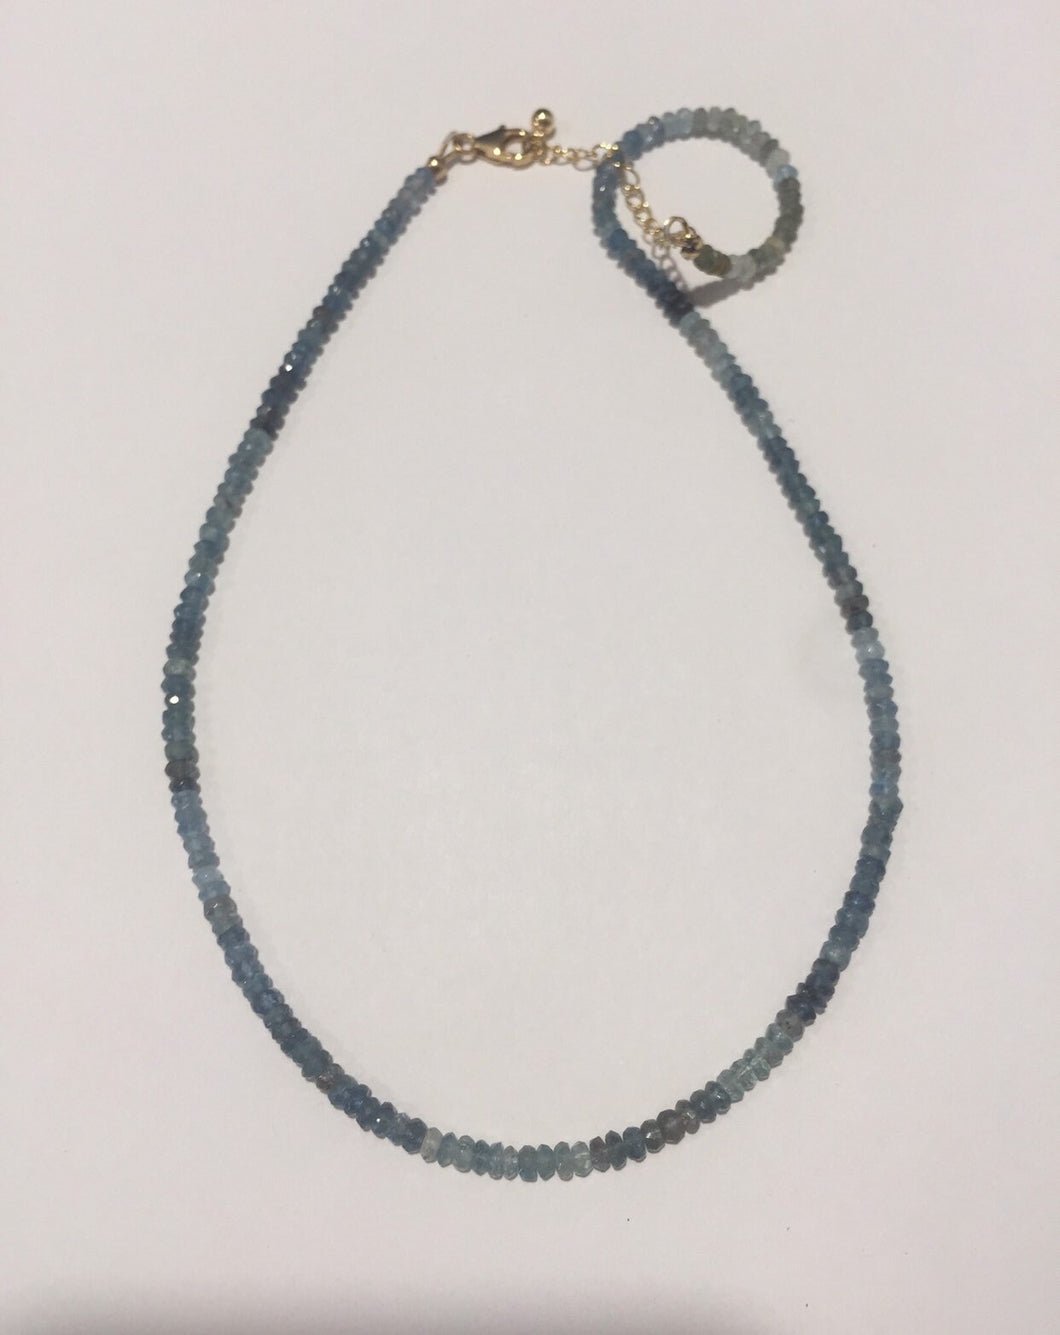 stone beads necklace,moss aqua necklace,bead necklace,gem stone necklace,silver necklace, aquamarine mass necklace,cut stone necklace,